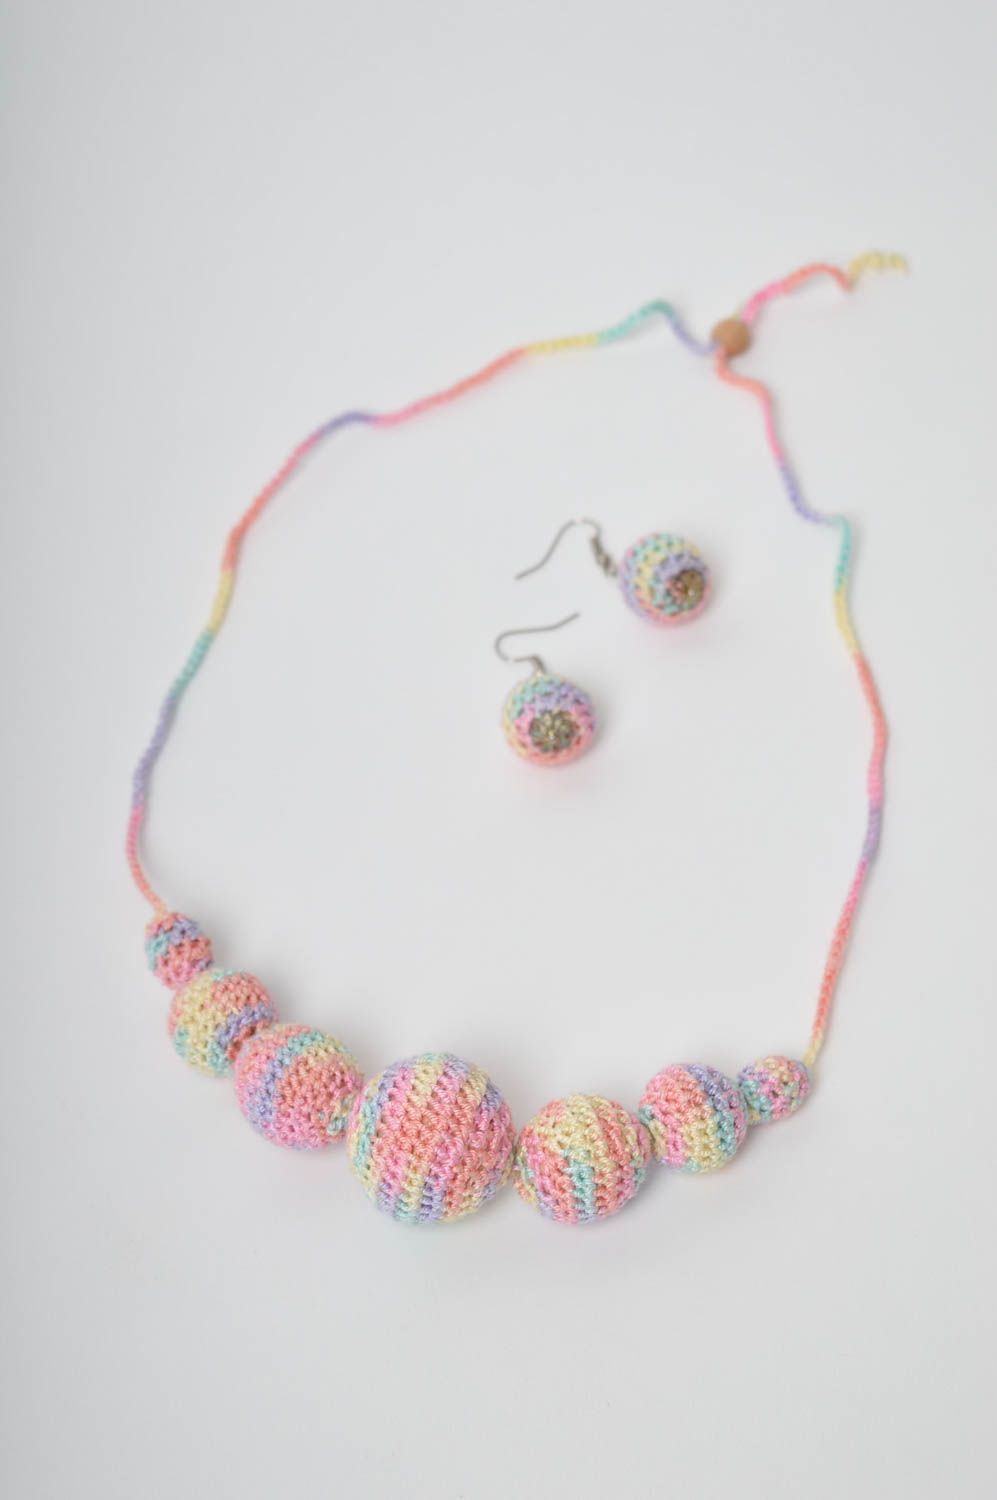 Handmade crochet earrings crochet ball necklace costume jewelry designs photo 2